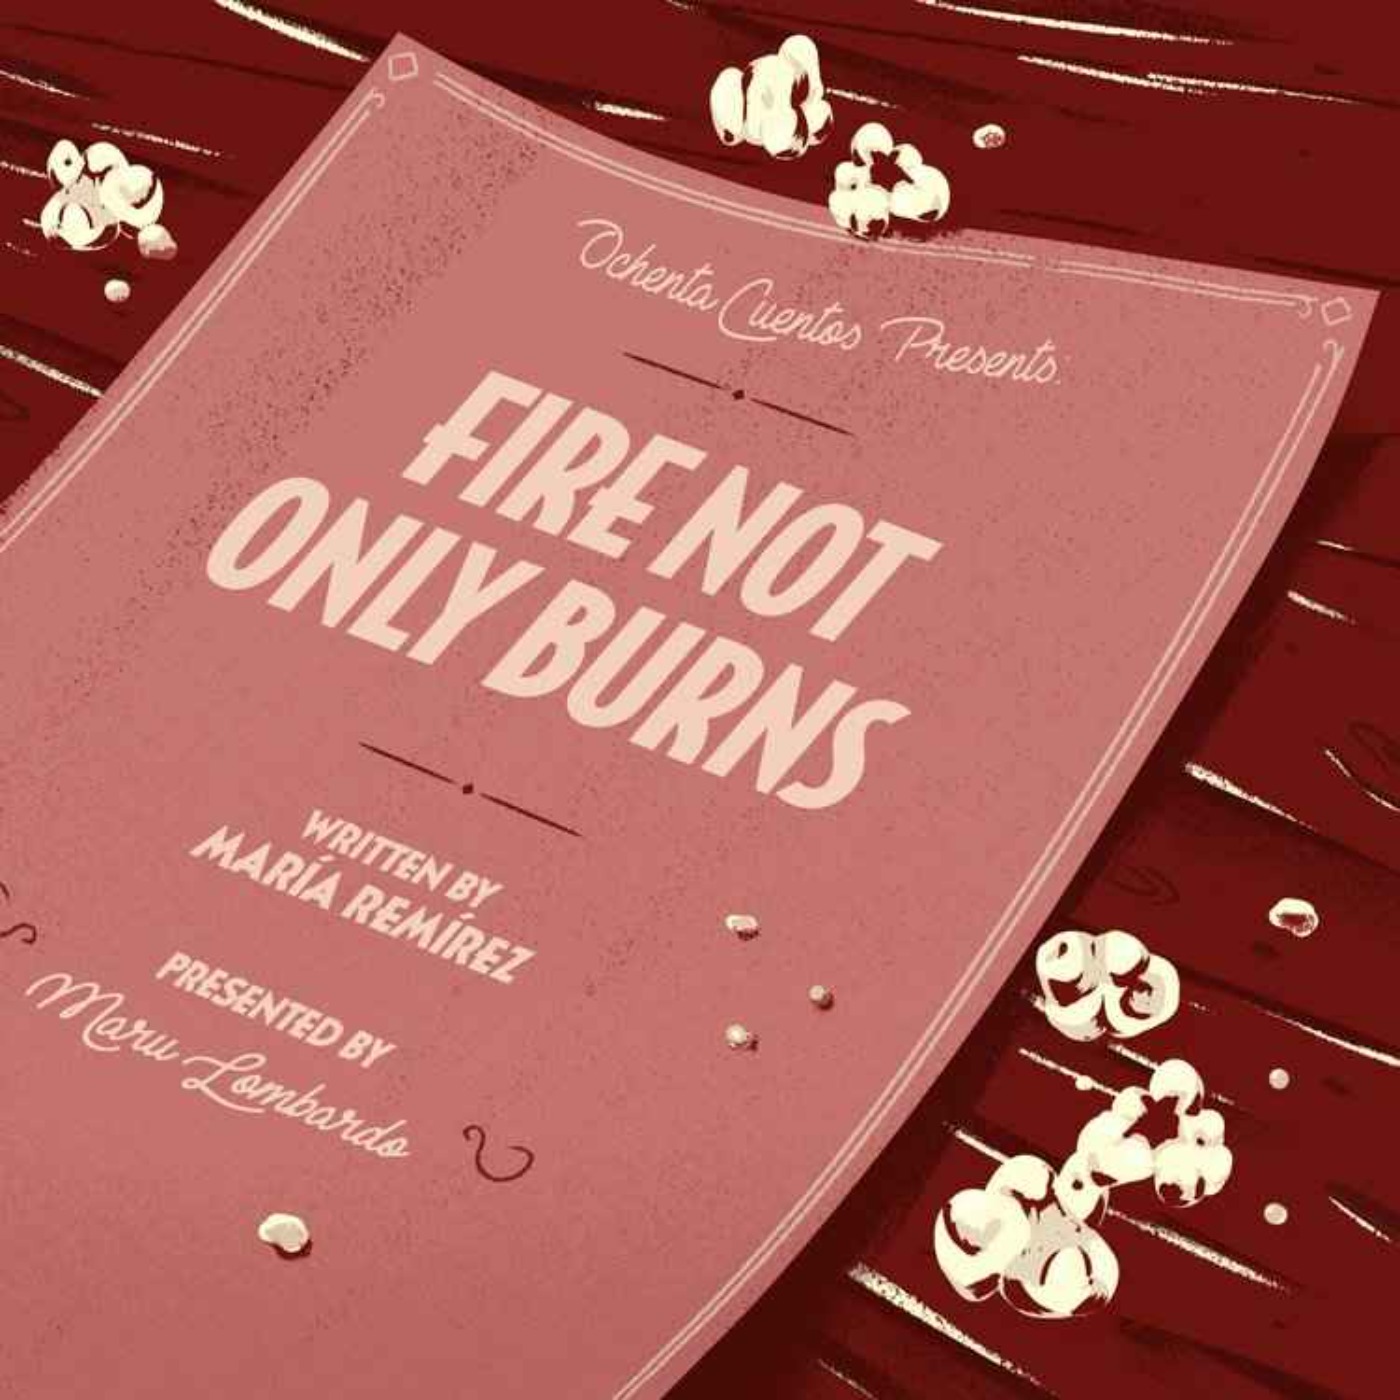 Fire Not Only Burns [Repeat - International Women’s Month]